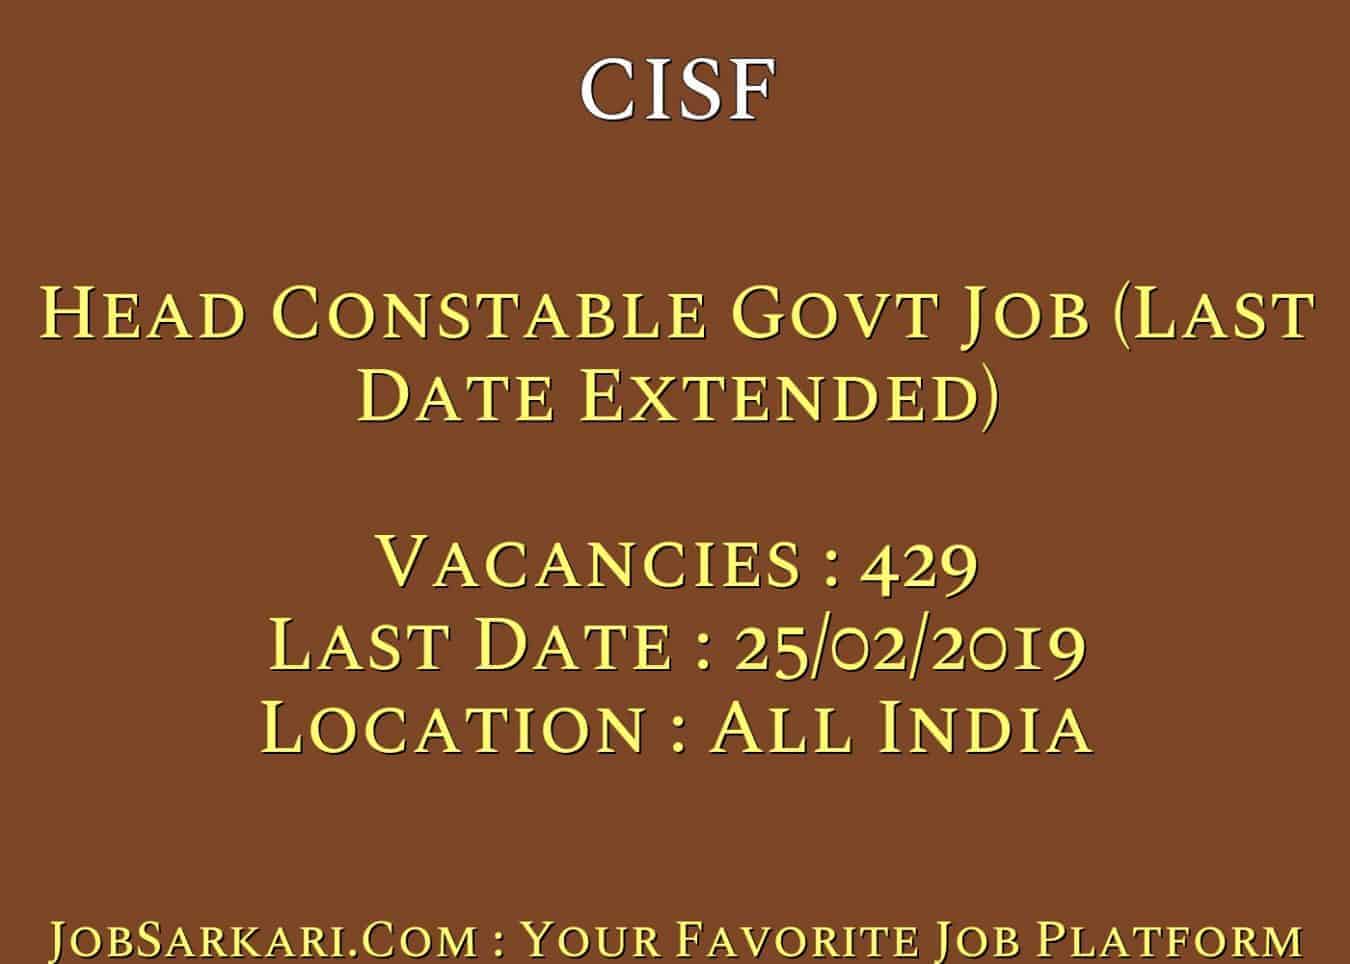 CISF Recruitment 2019 For Head Constable Govt Job